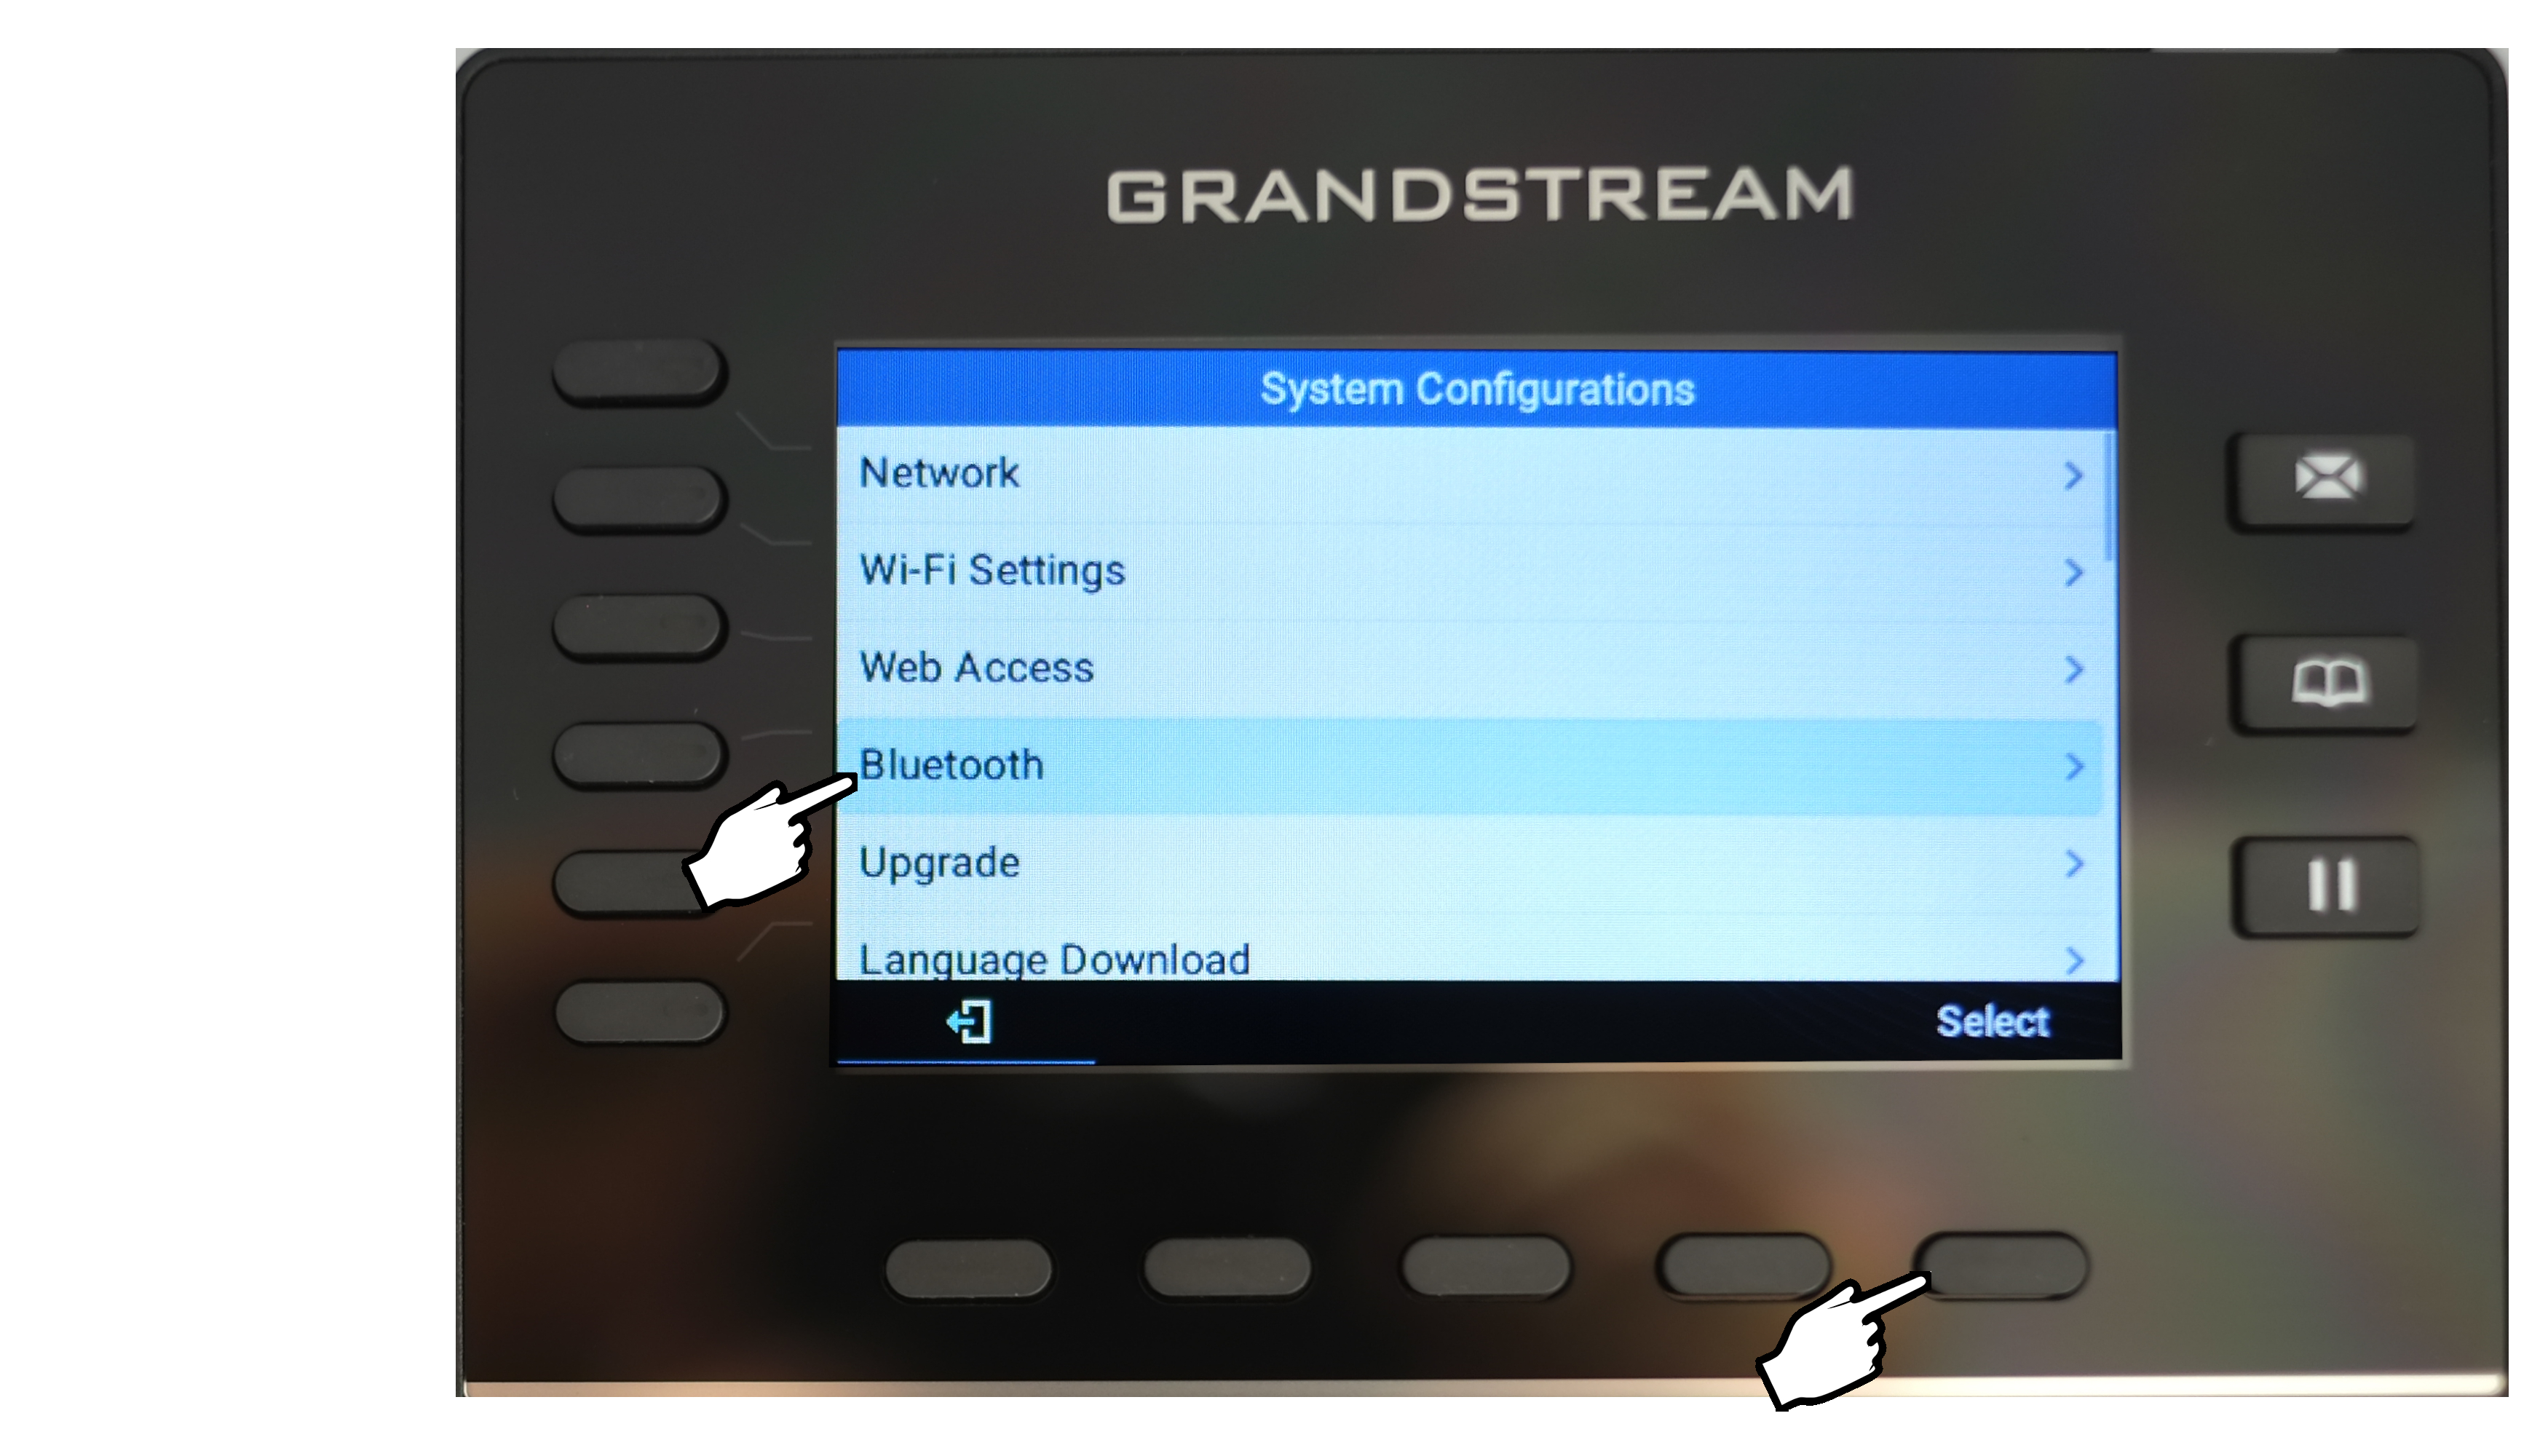 Grandstream Bluetooth setting page